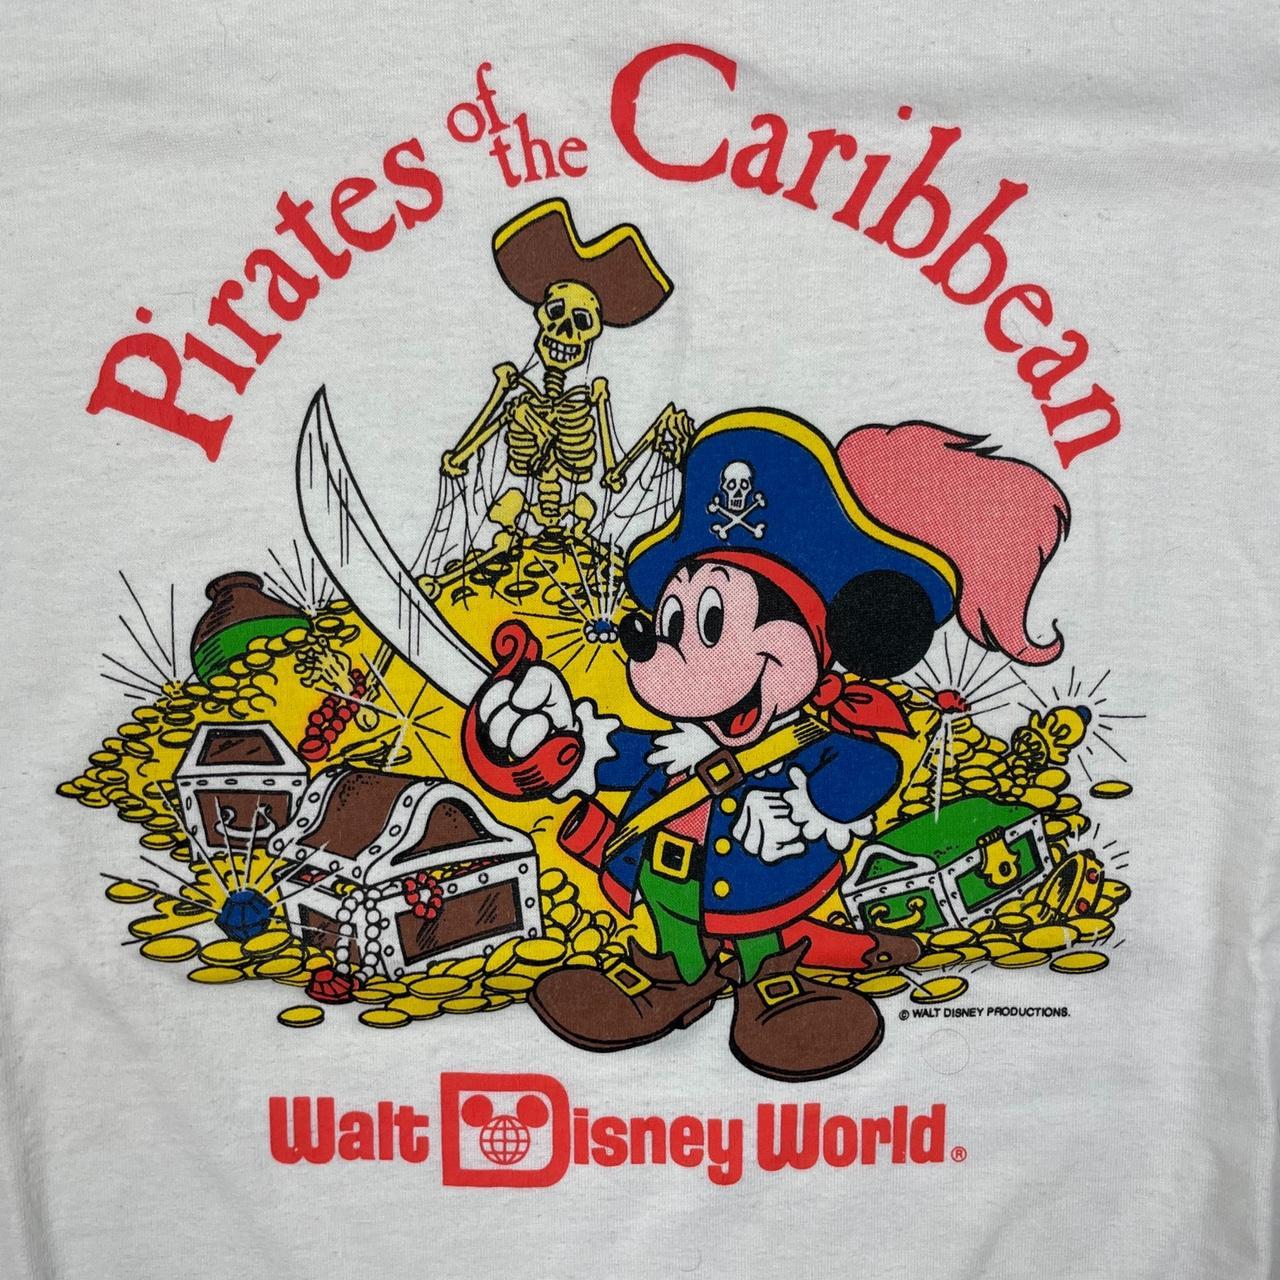 Vintage Disney pirates of the Caribbean shirt, - Depop